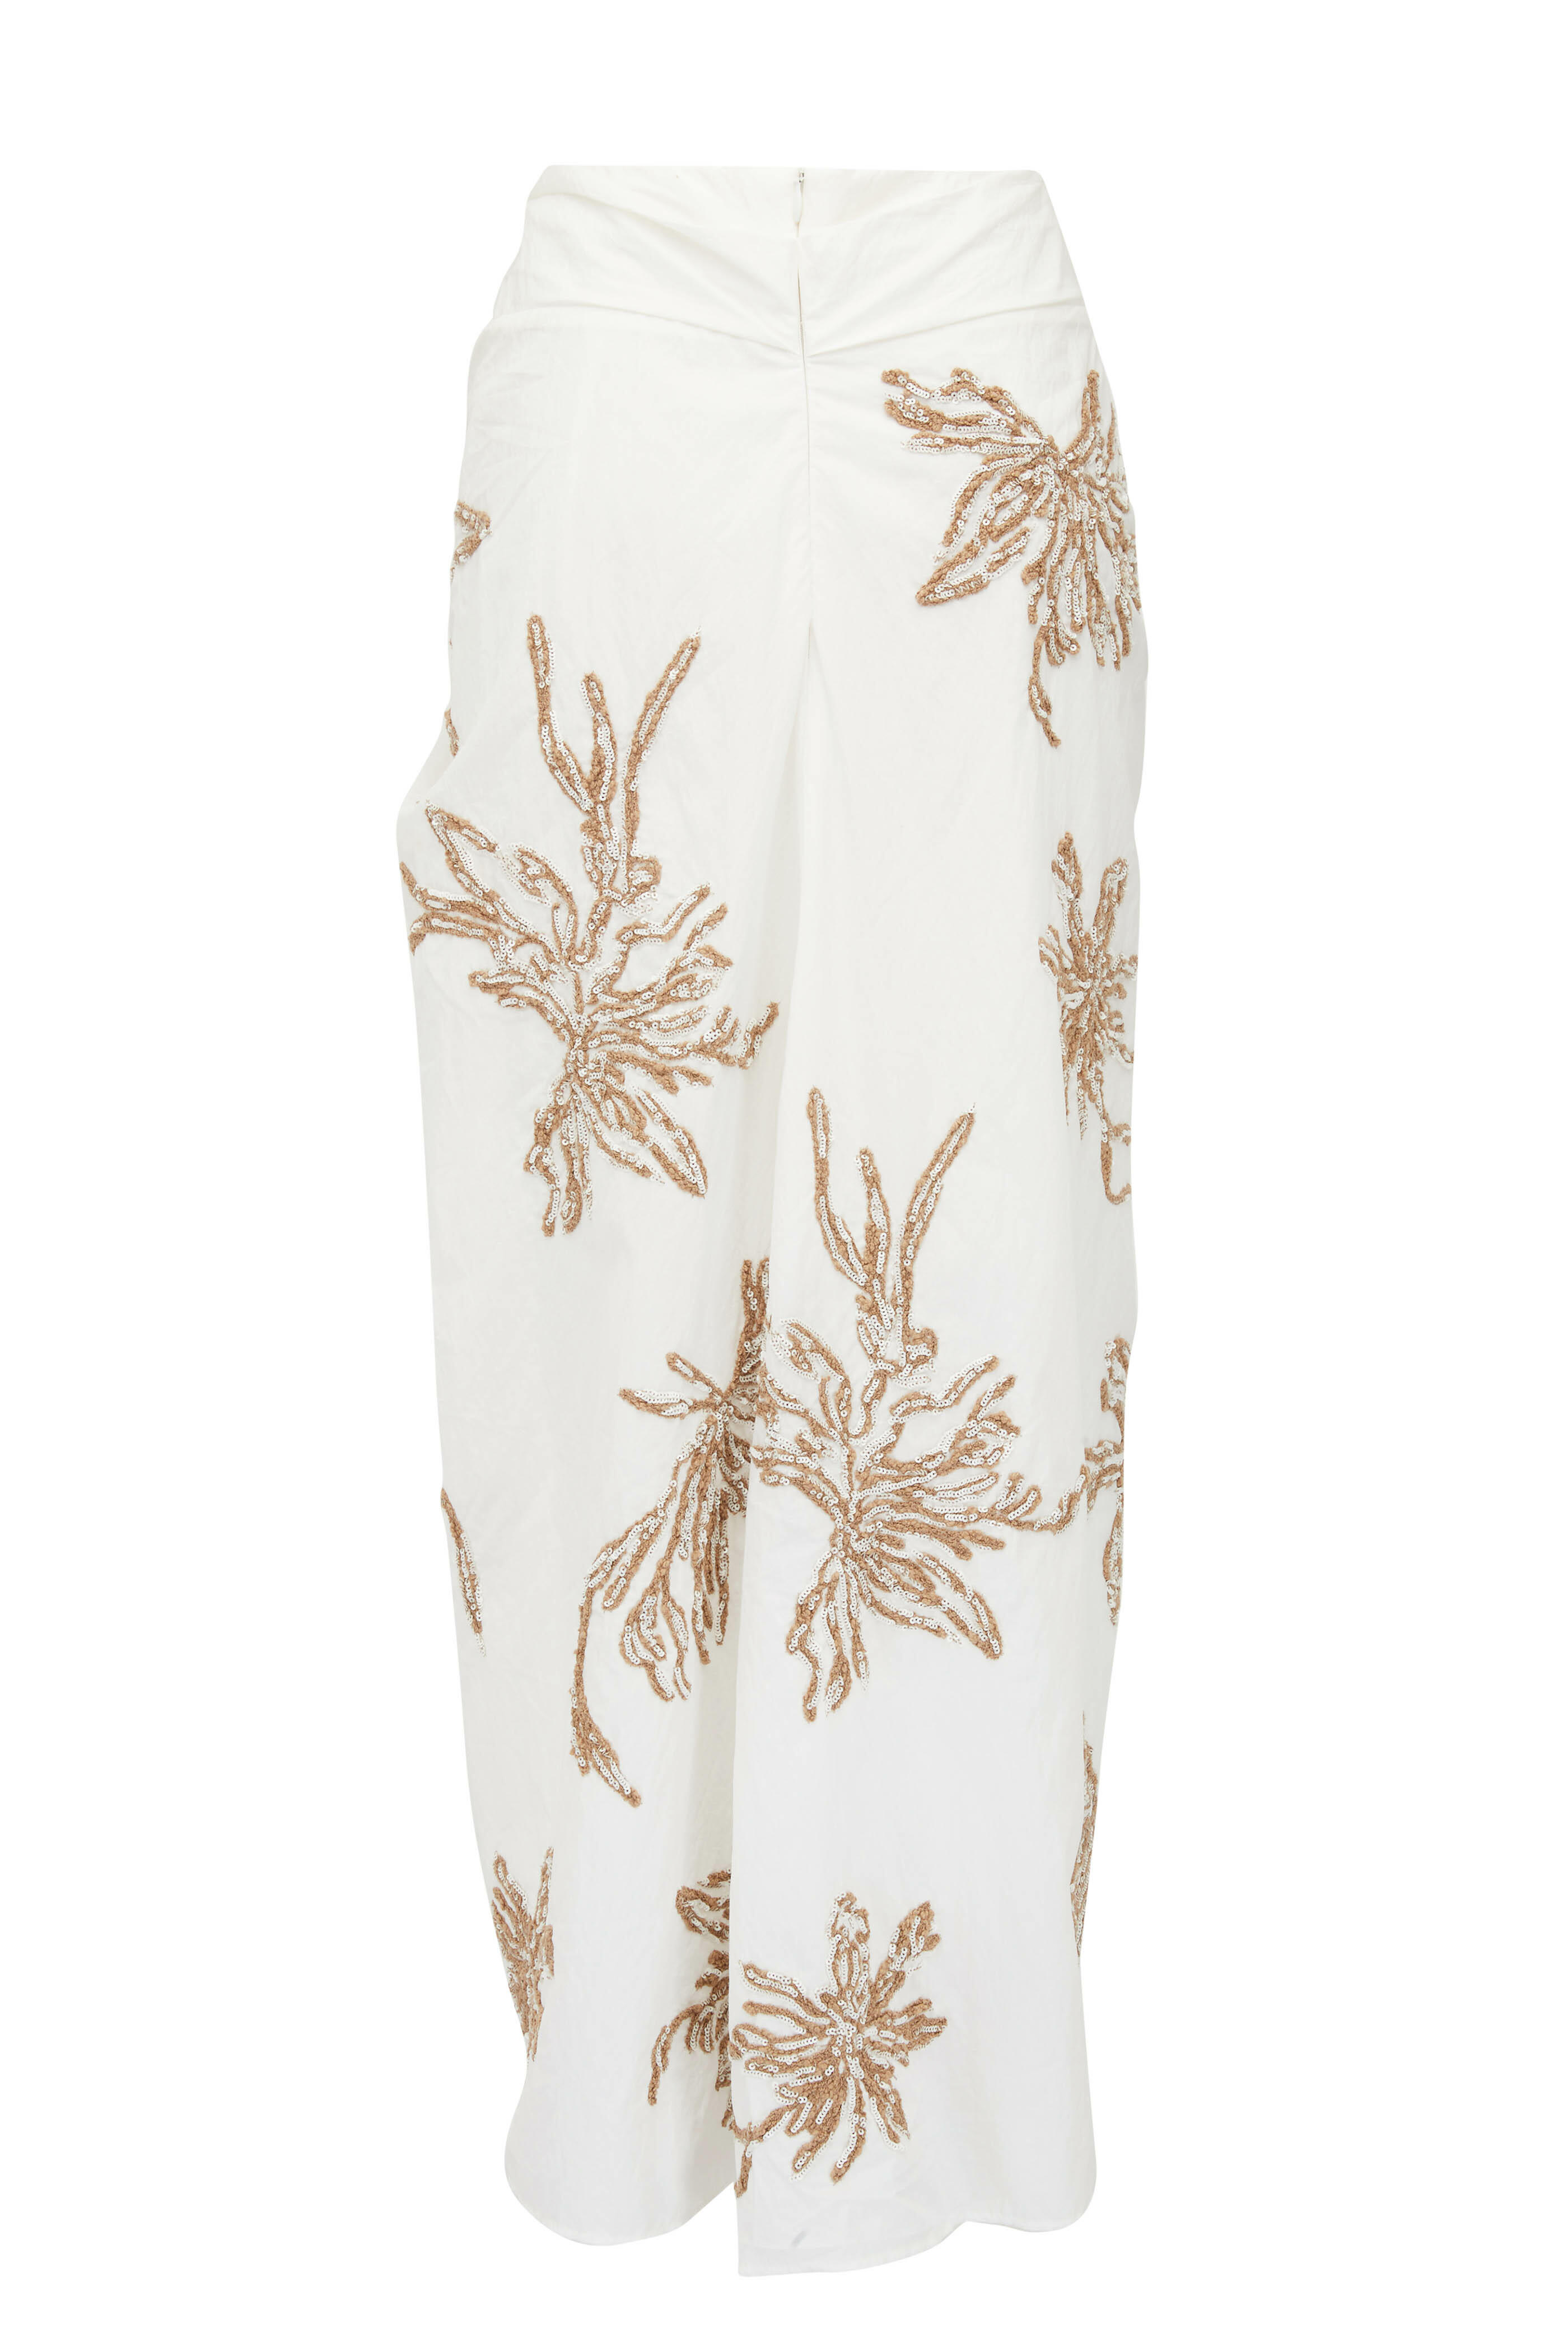 Brunello Cucinelli floral-embroidered cotton shorts